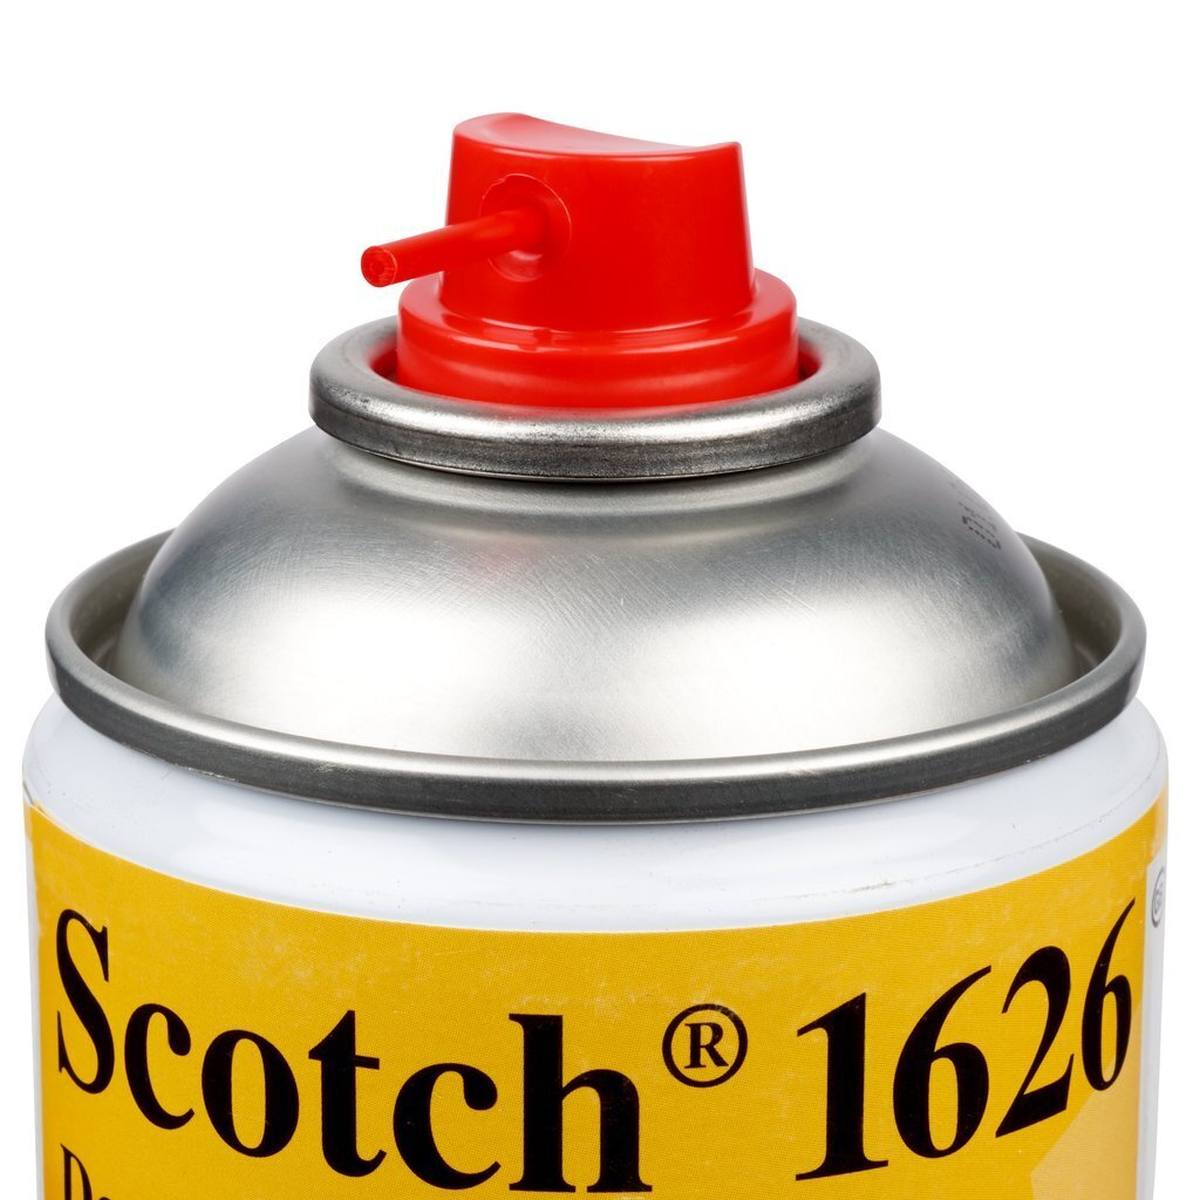 3M Scotch 1626 Reinigings- en ontvettingsspray, 400 ml